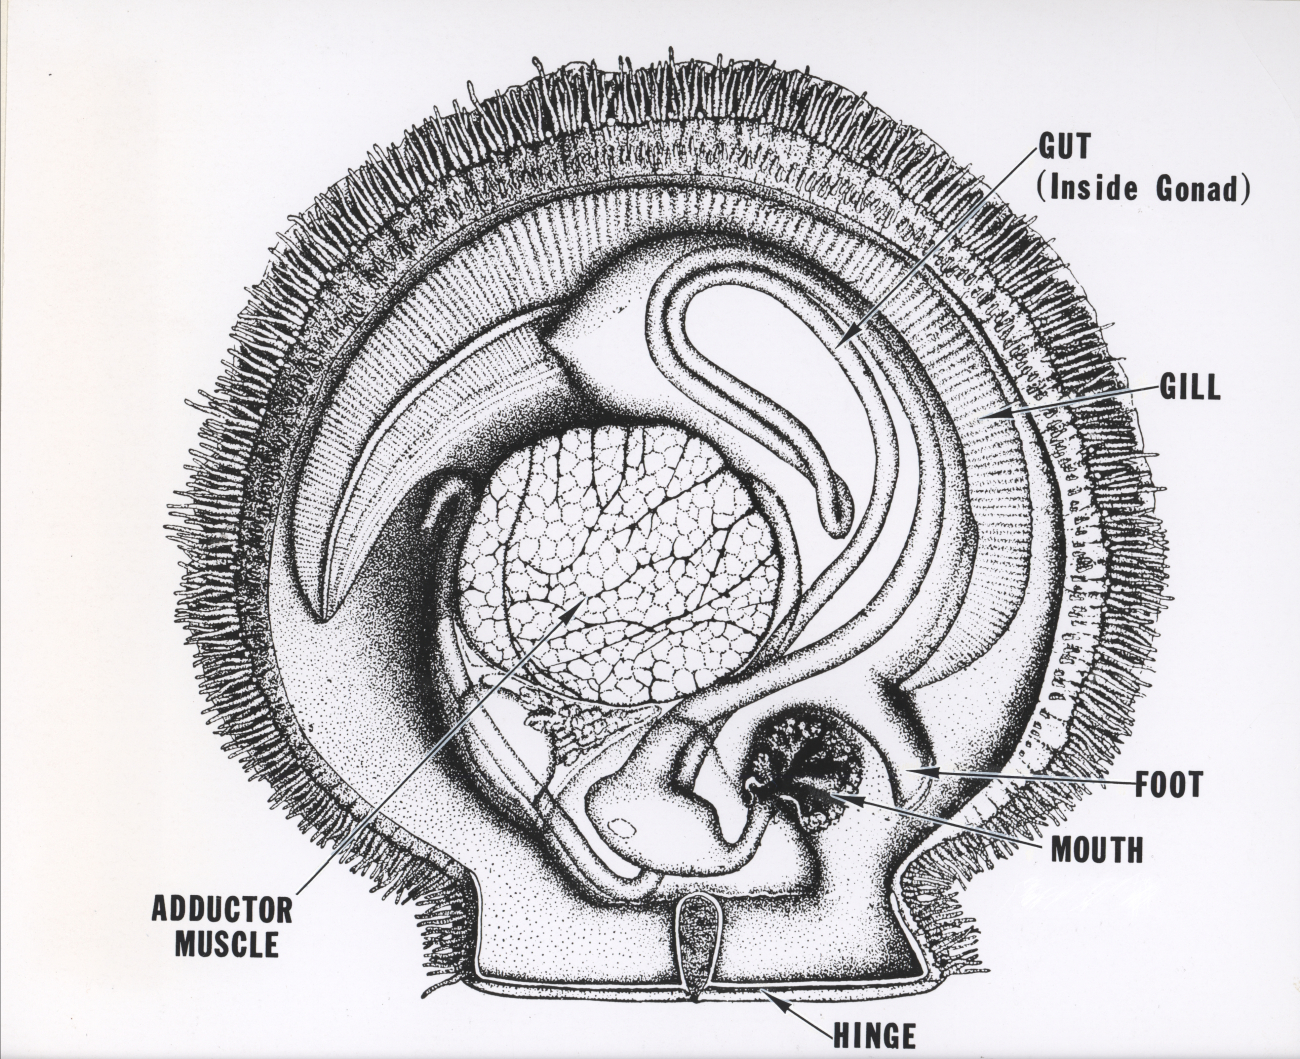 Gross anatomy of a sea scallop